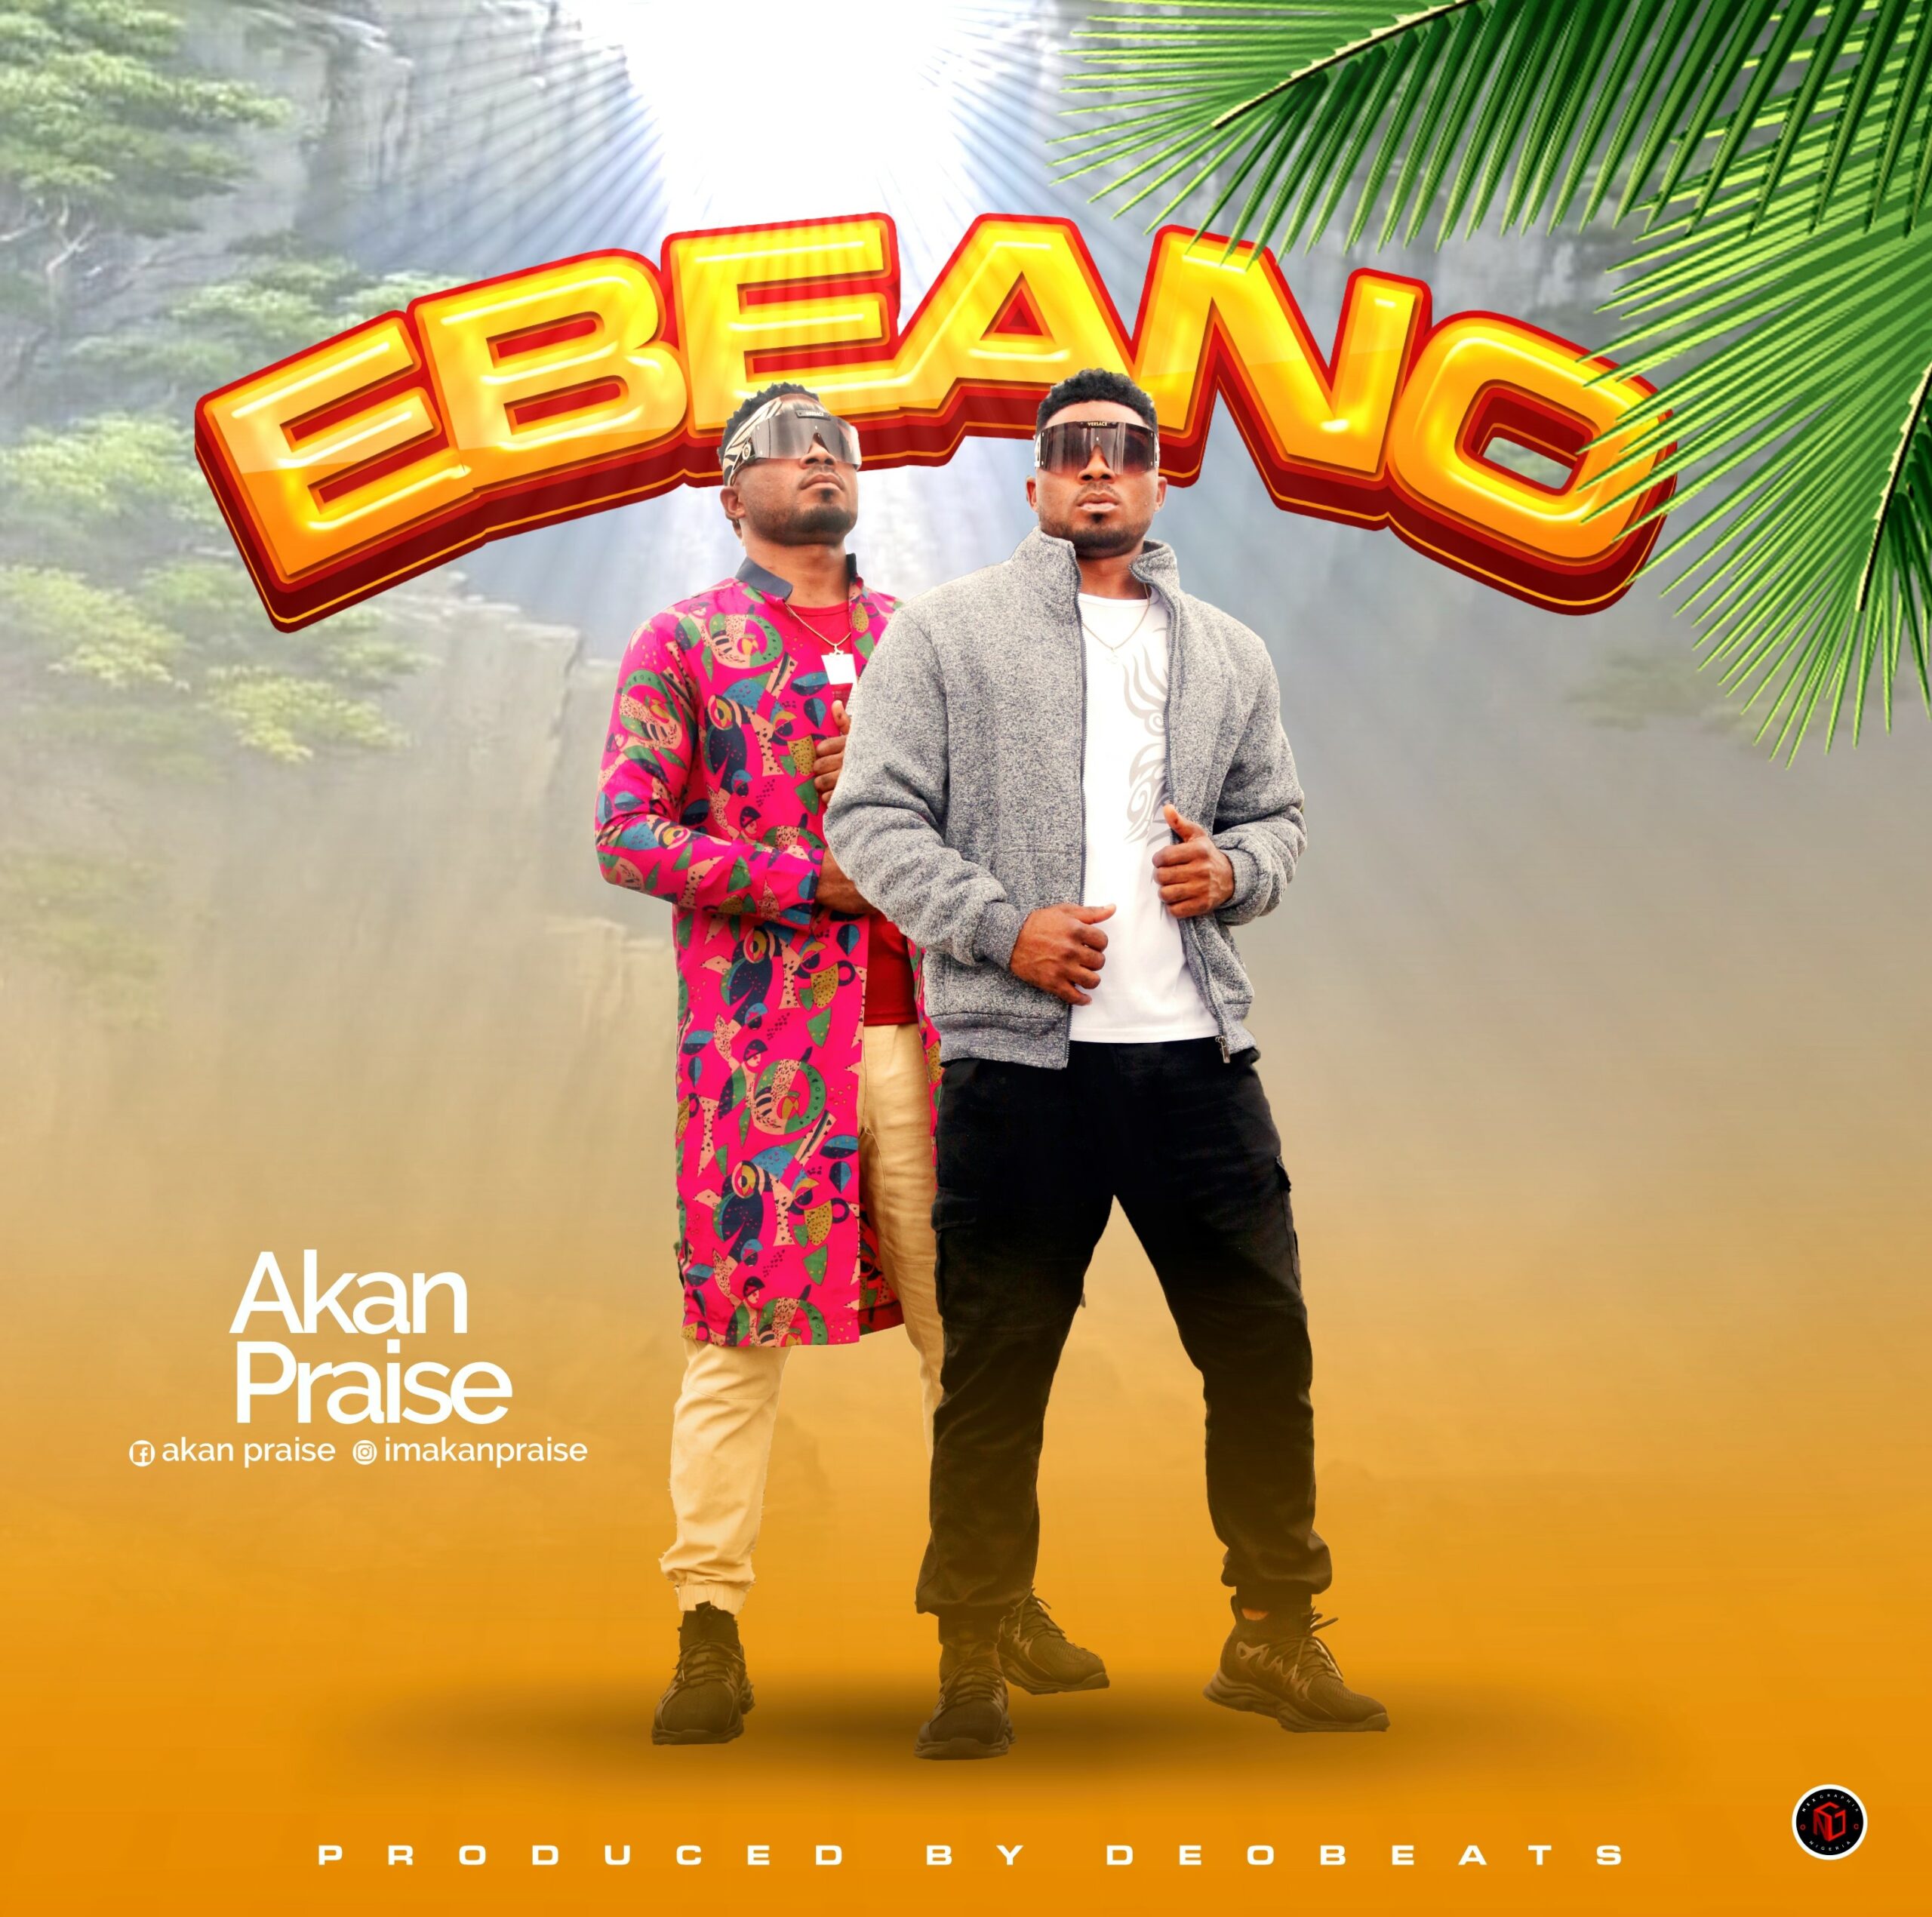 DOWNLOAD MP3: Akan praise - Ebeano